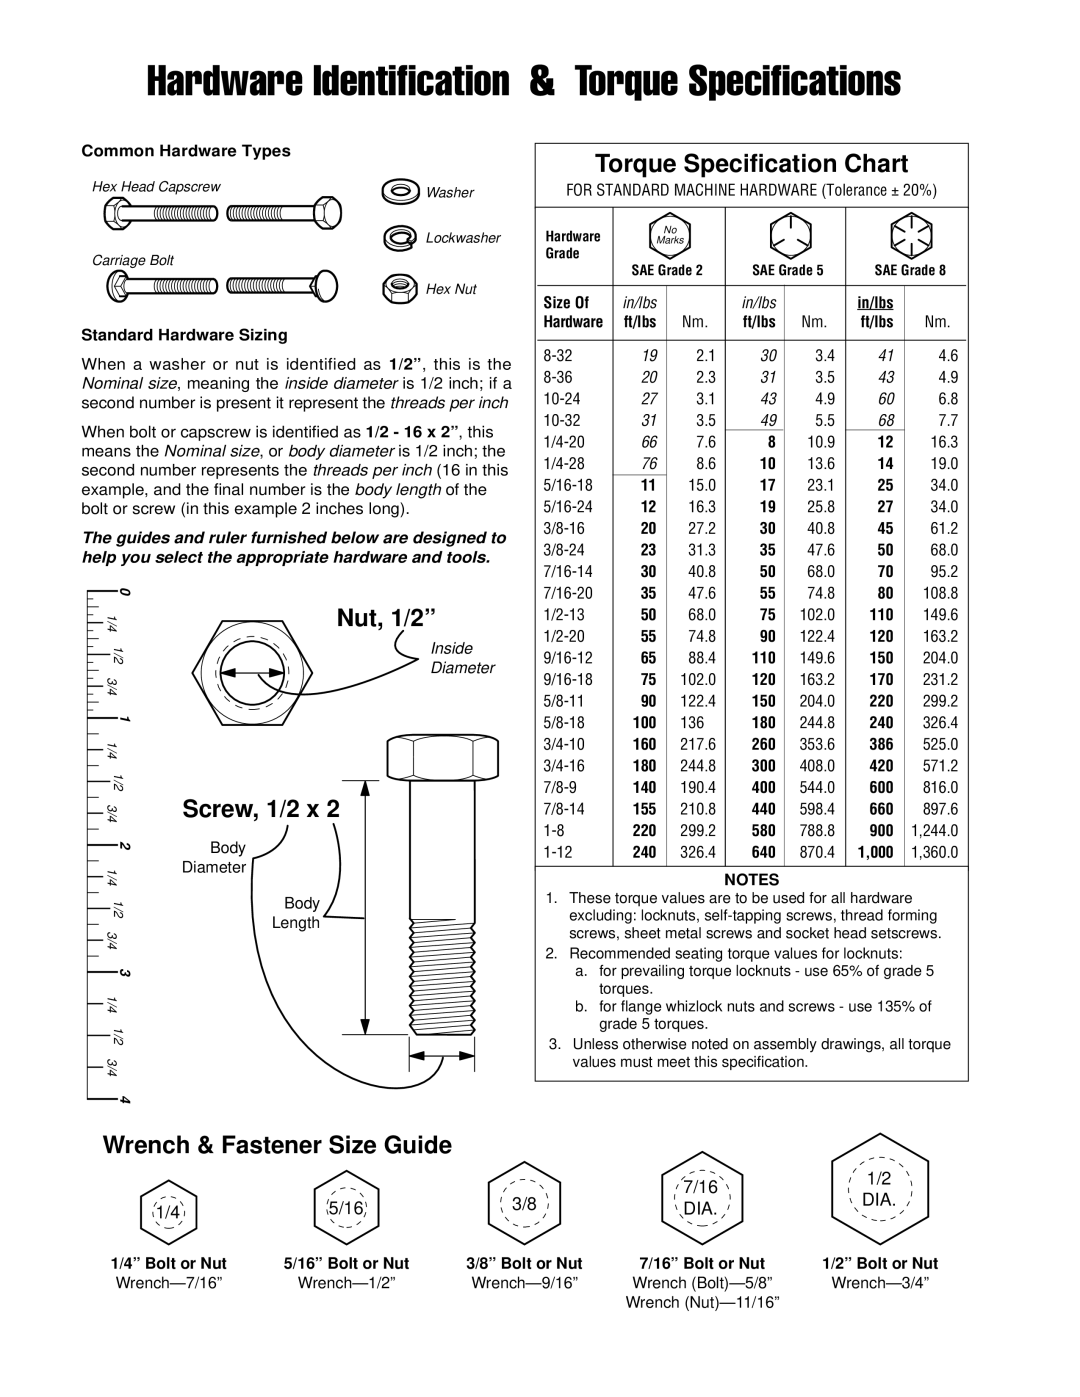 Simplicity 1686609 Hardware Identification & Torque Specifications, Torque Specification Chart, Nut, 1/2”, Screw, 1/2 x 